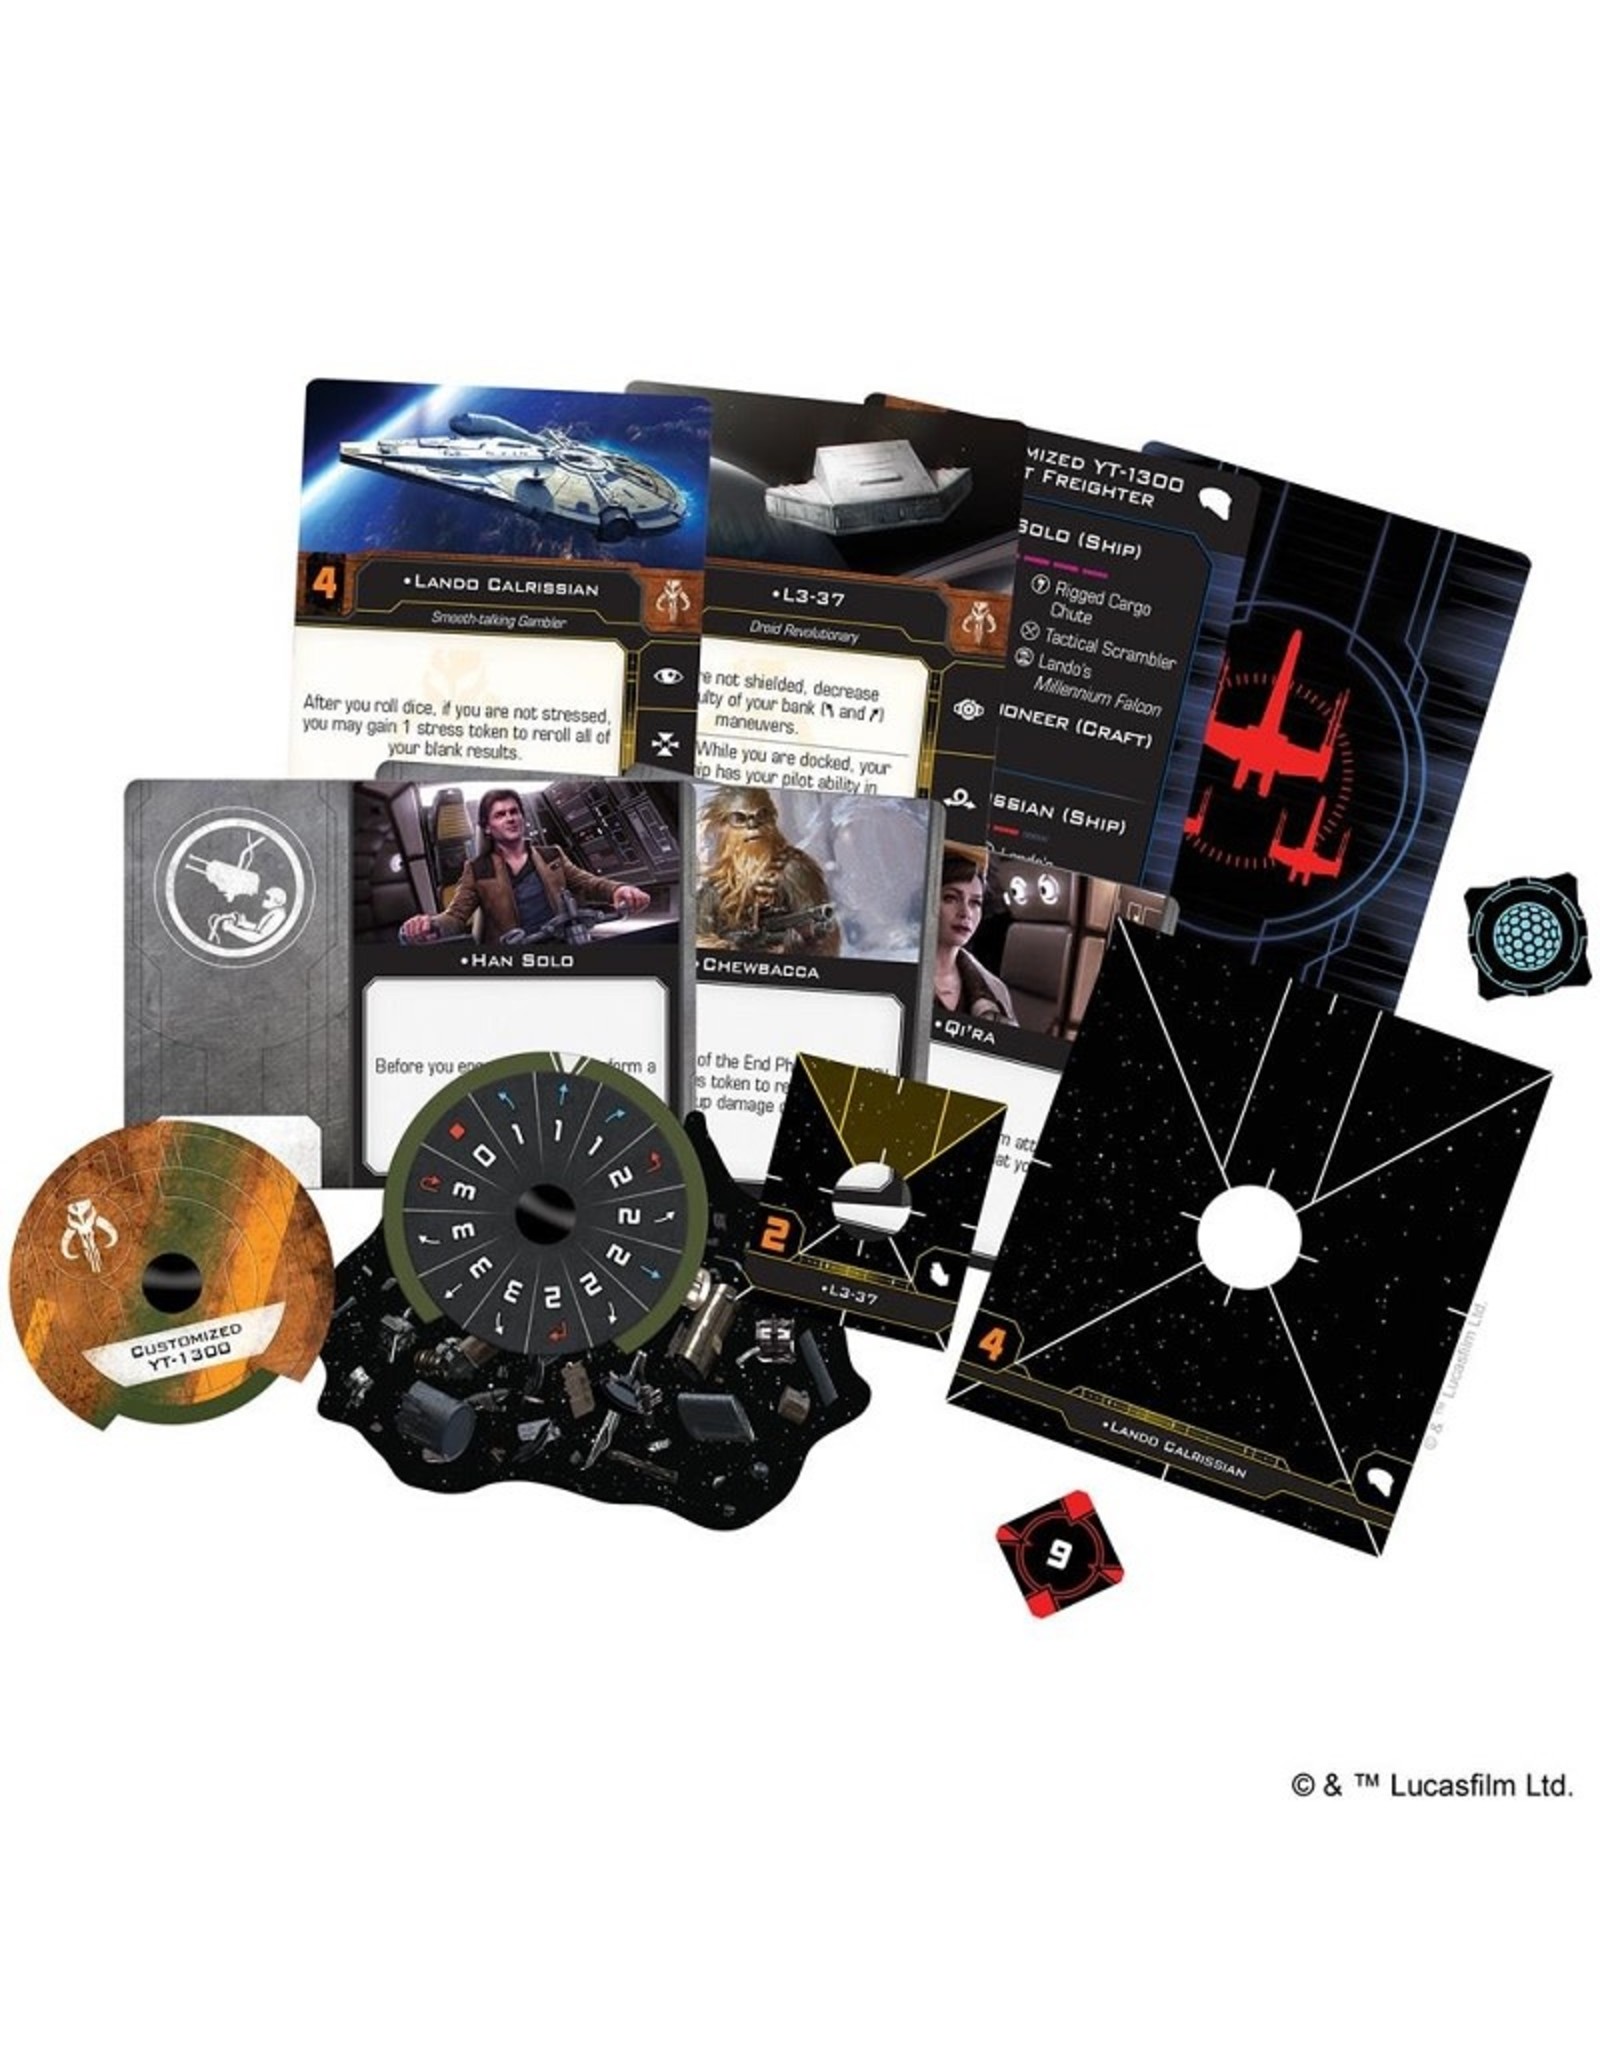 Atomic Mass Games Star Wars X-Wing: Lando's Millenium Falcon - 2nd Edition